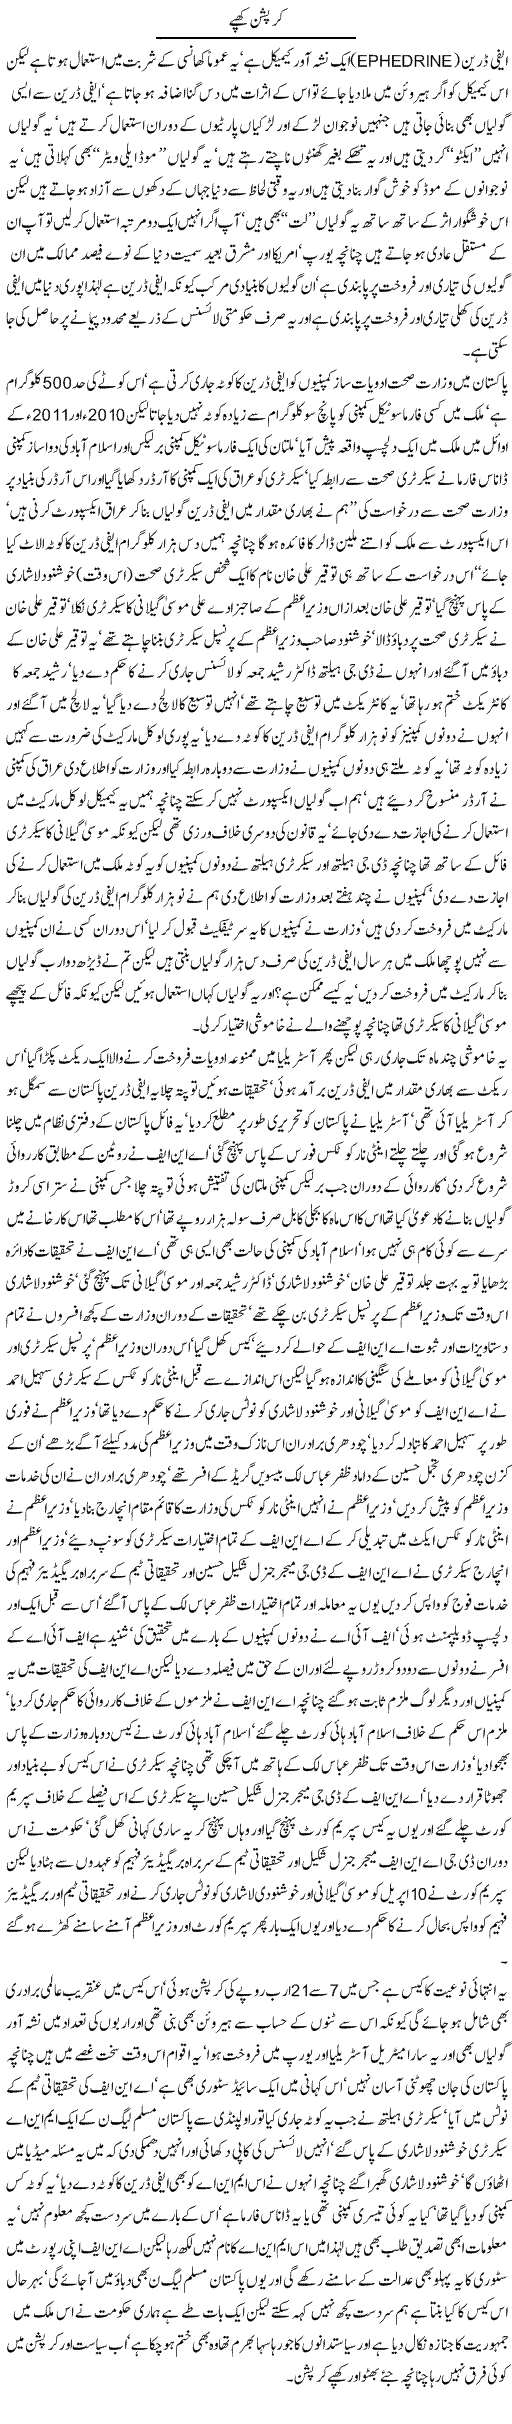 Corruption Khappay Express Column Javed Chaudhry 12 April 2012